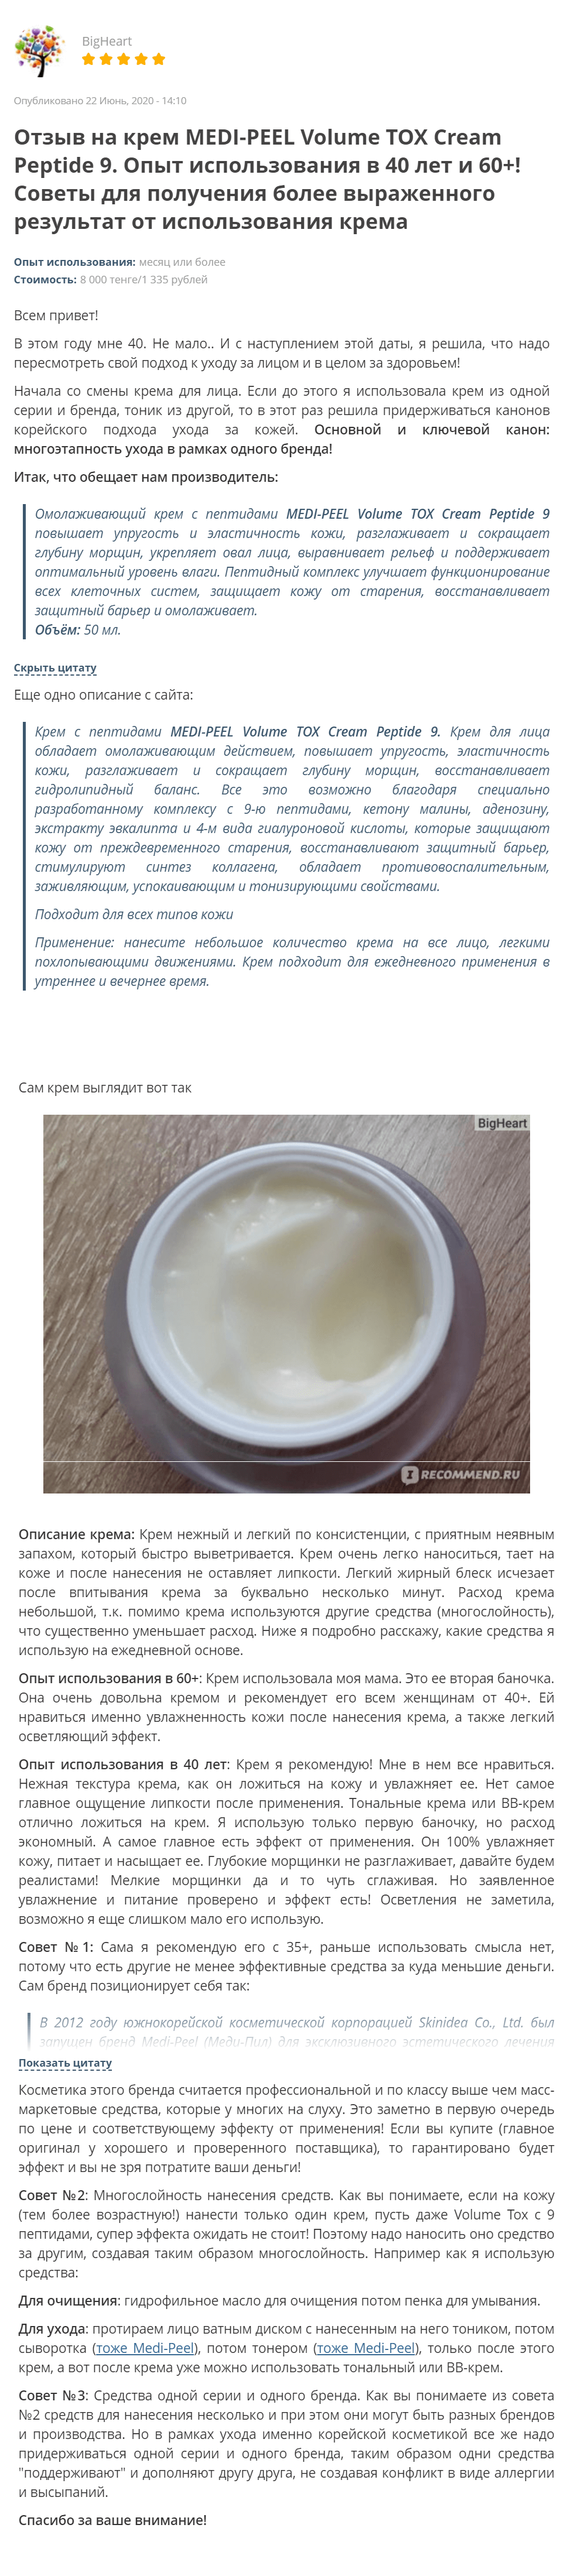 Volume Tox Cream Peptide 9 [MEDI-PEEL]